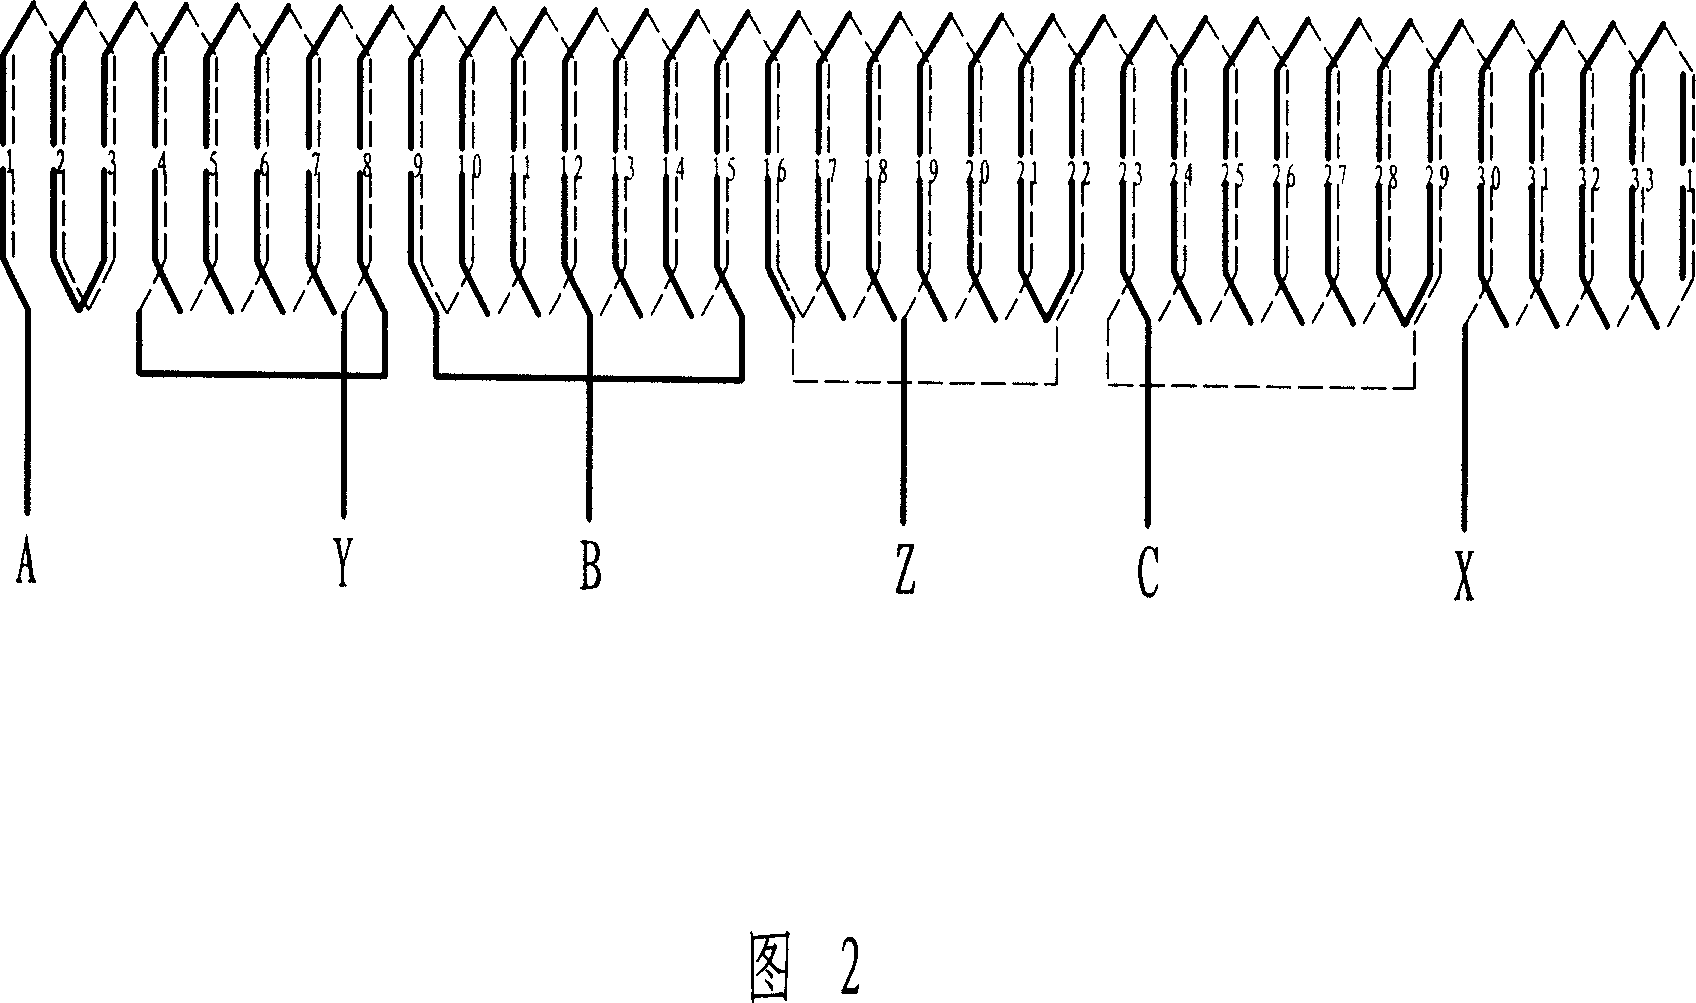 Assembled scheme for brushless DC motor slot number and magnetic steel number